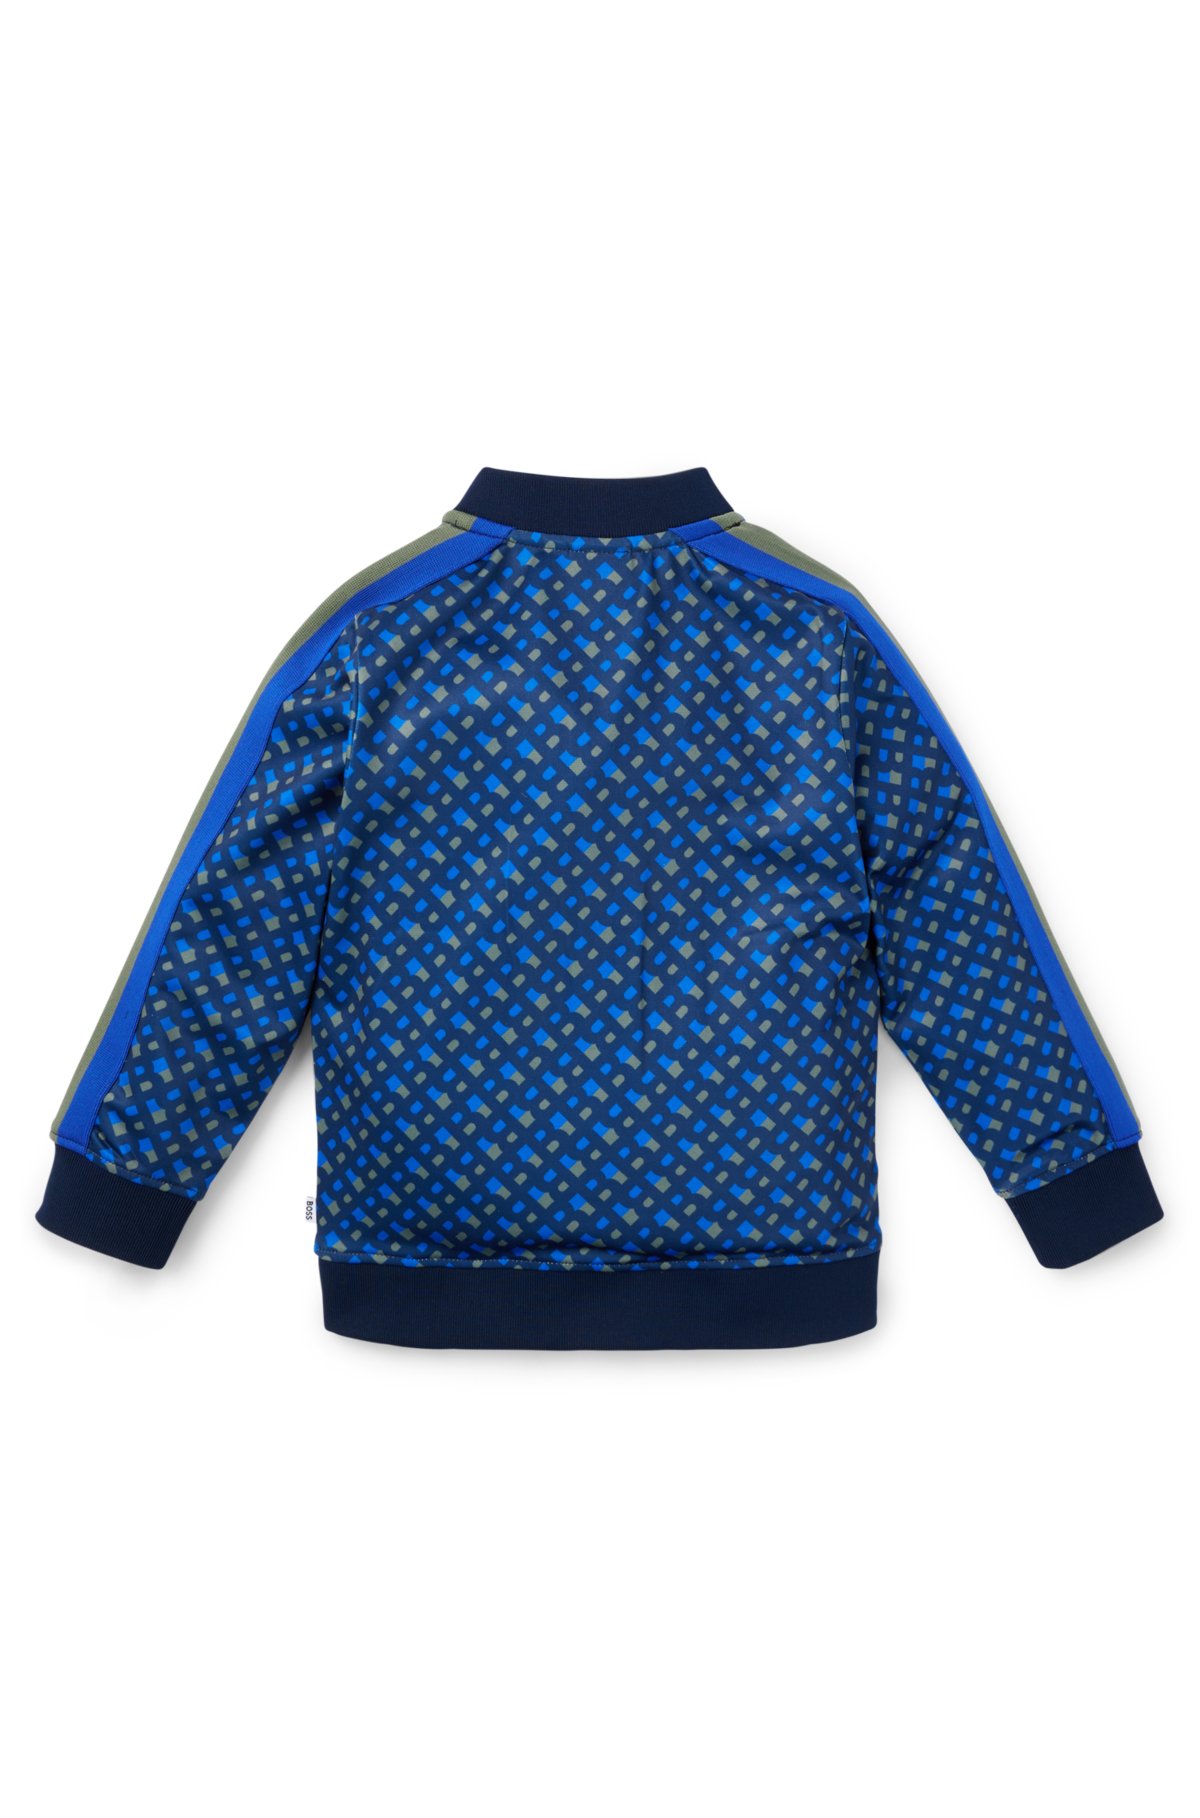 Louis Vuitton Men's LV x NBA Zip-Through Hoodie Denim Blue